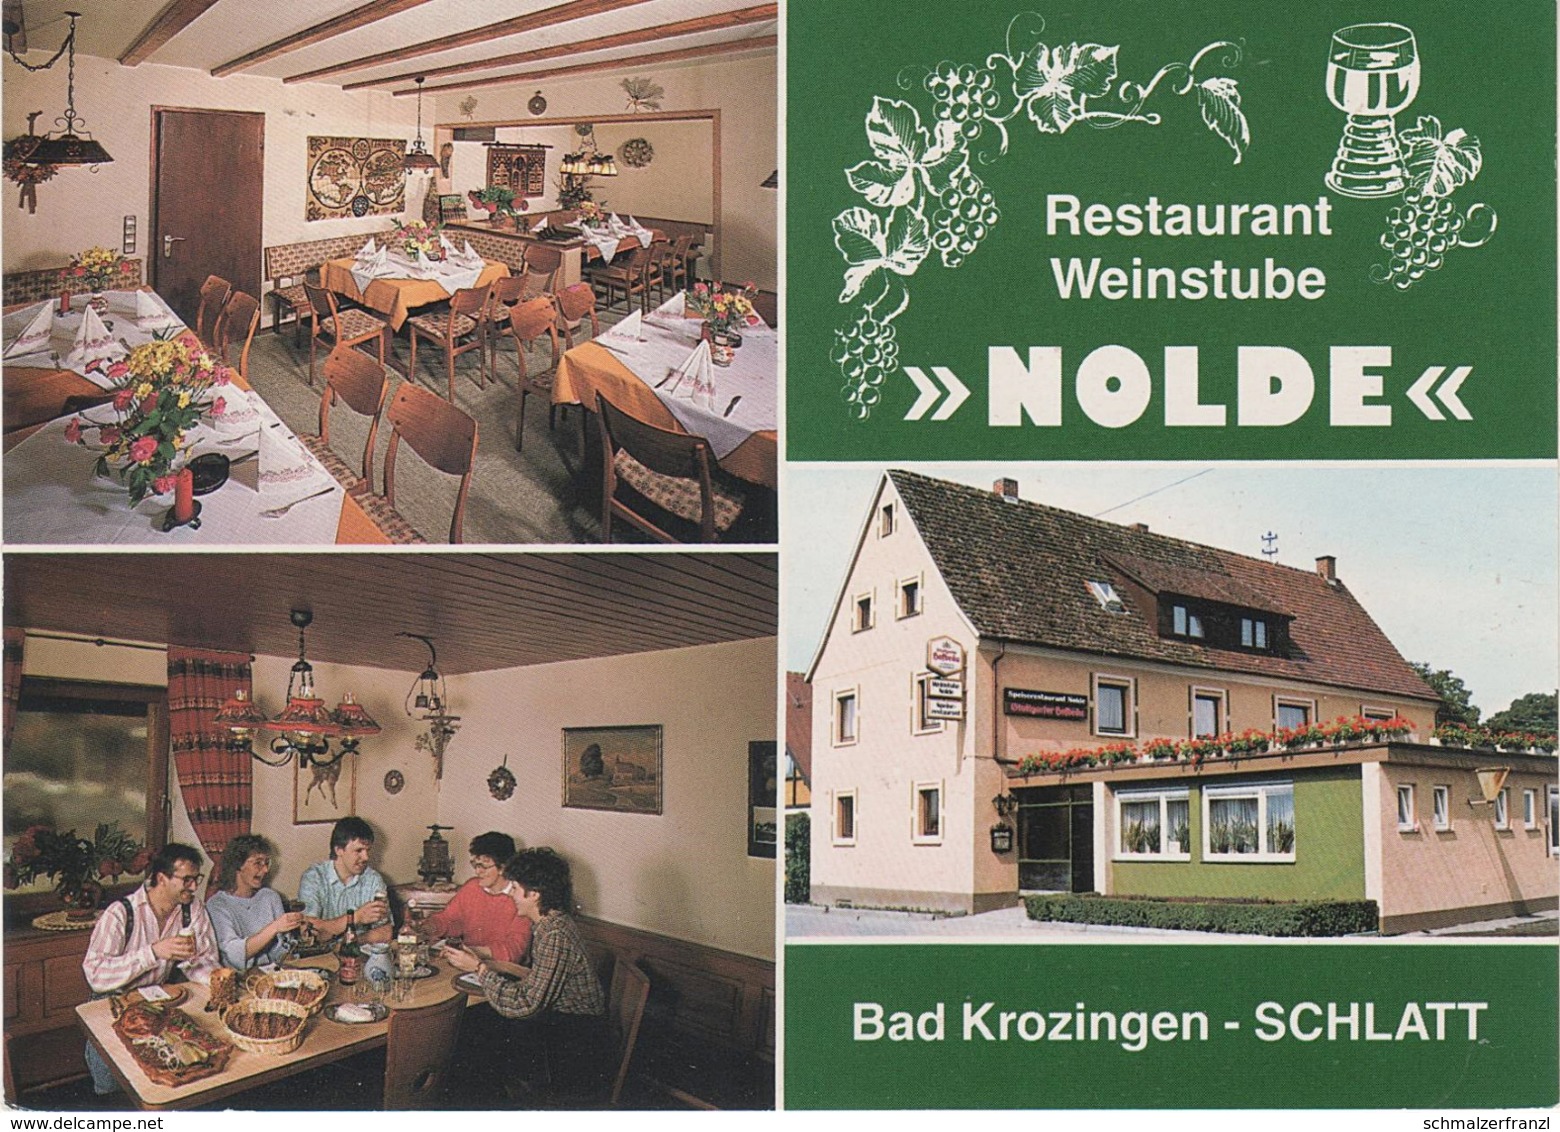 AK Schlatt Restaurant Weinstube Nolde A Bad Krozingen Biengen Tunsel Feldkirch Bremgarten Hartheim Eschbach Heitersheim - Bad Krozingen